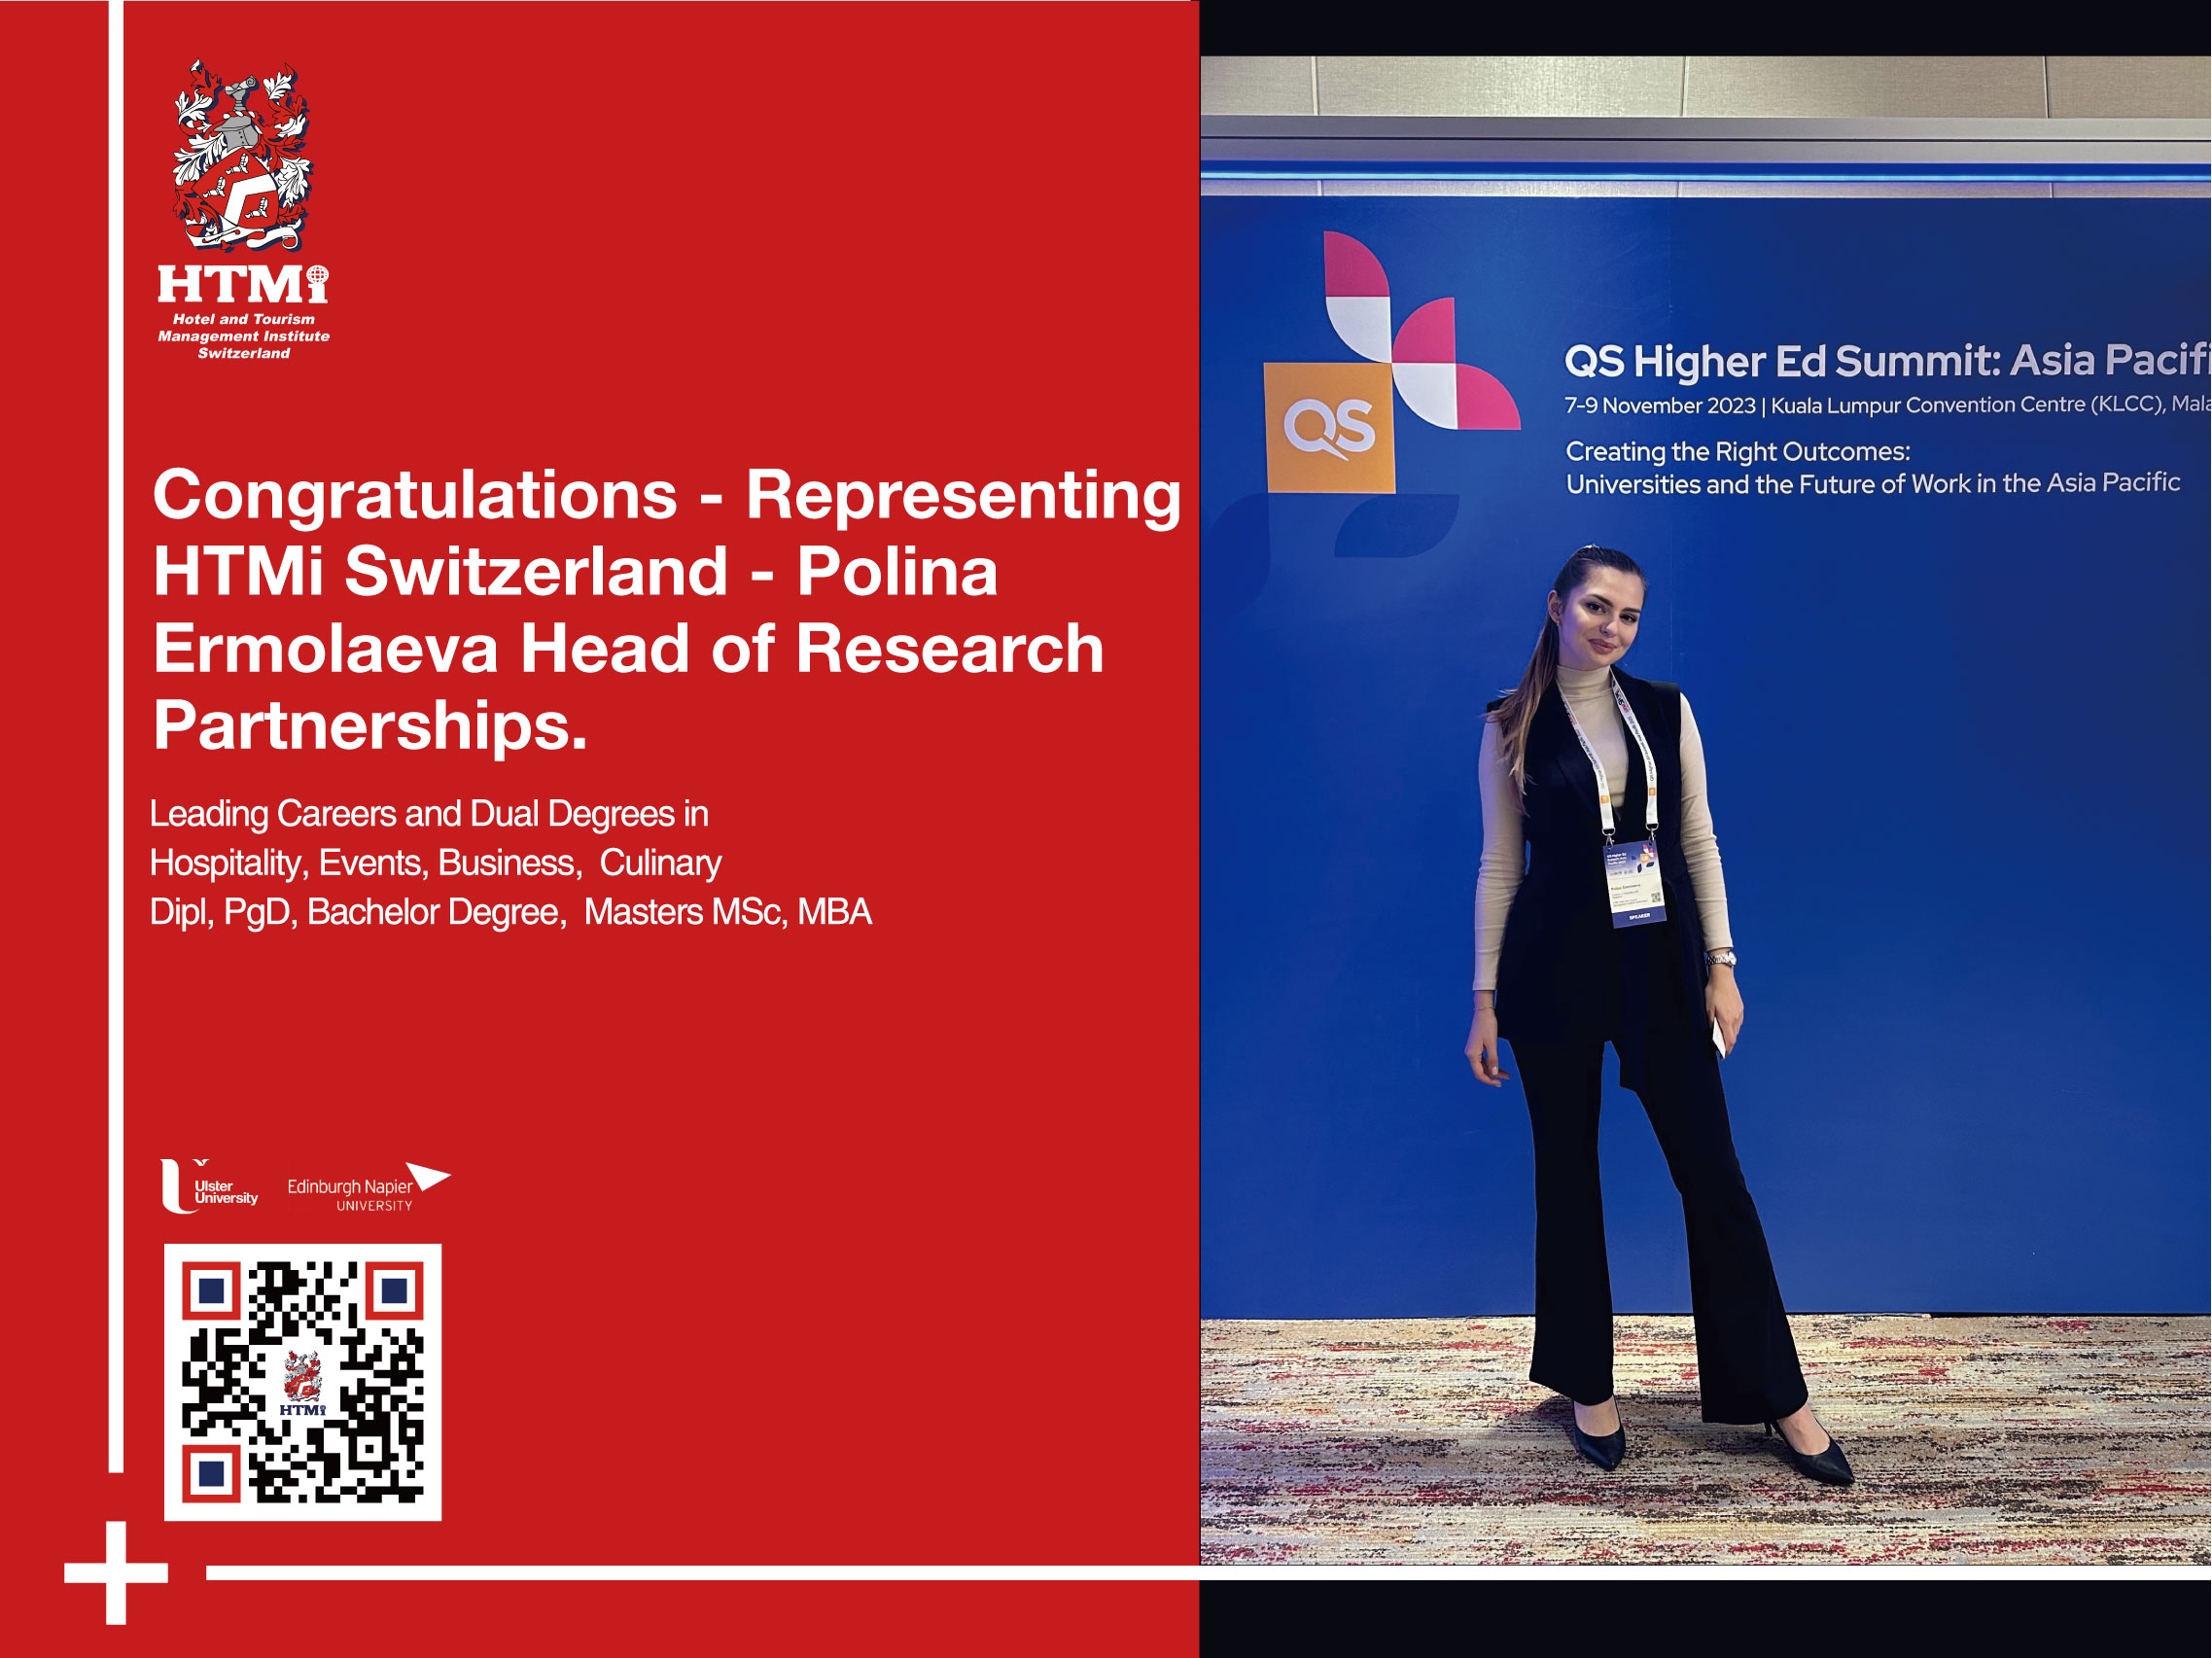 Congratulations - Representing HTMi Switzerland - Polina Ermolaeva, Head of Research Partnerships